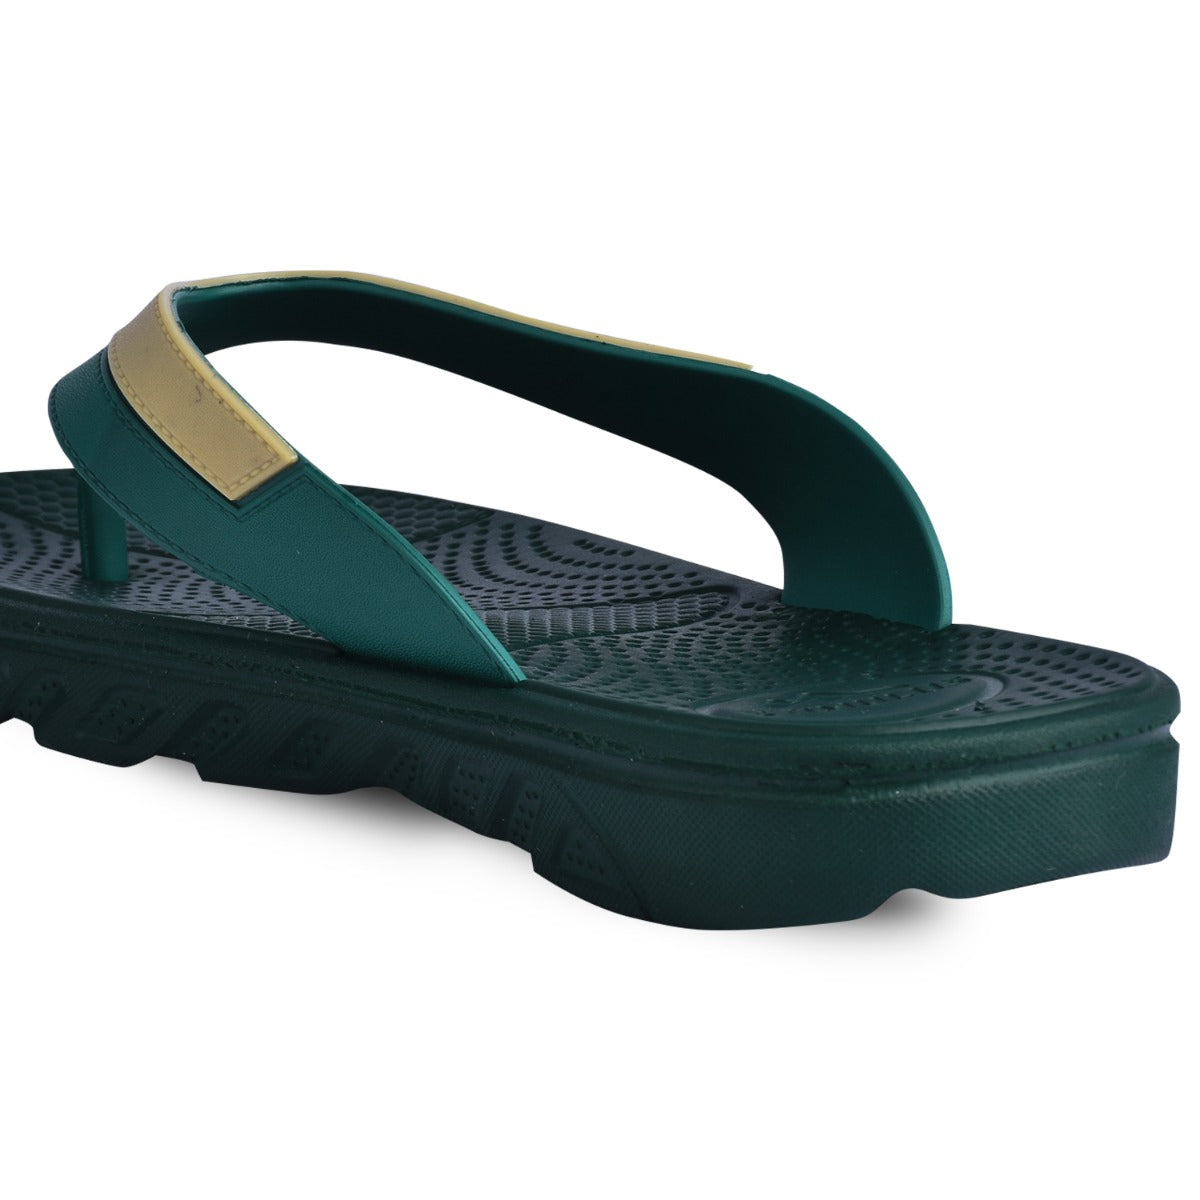 Bata Brand Mens V-Shape Leather Casual Slipons Slipper Flipflop Sandal 6012  (Black) :: RAJASHOES